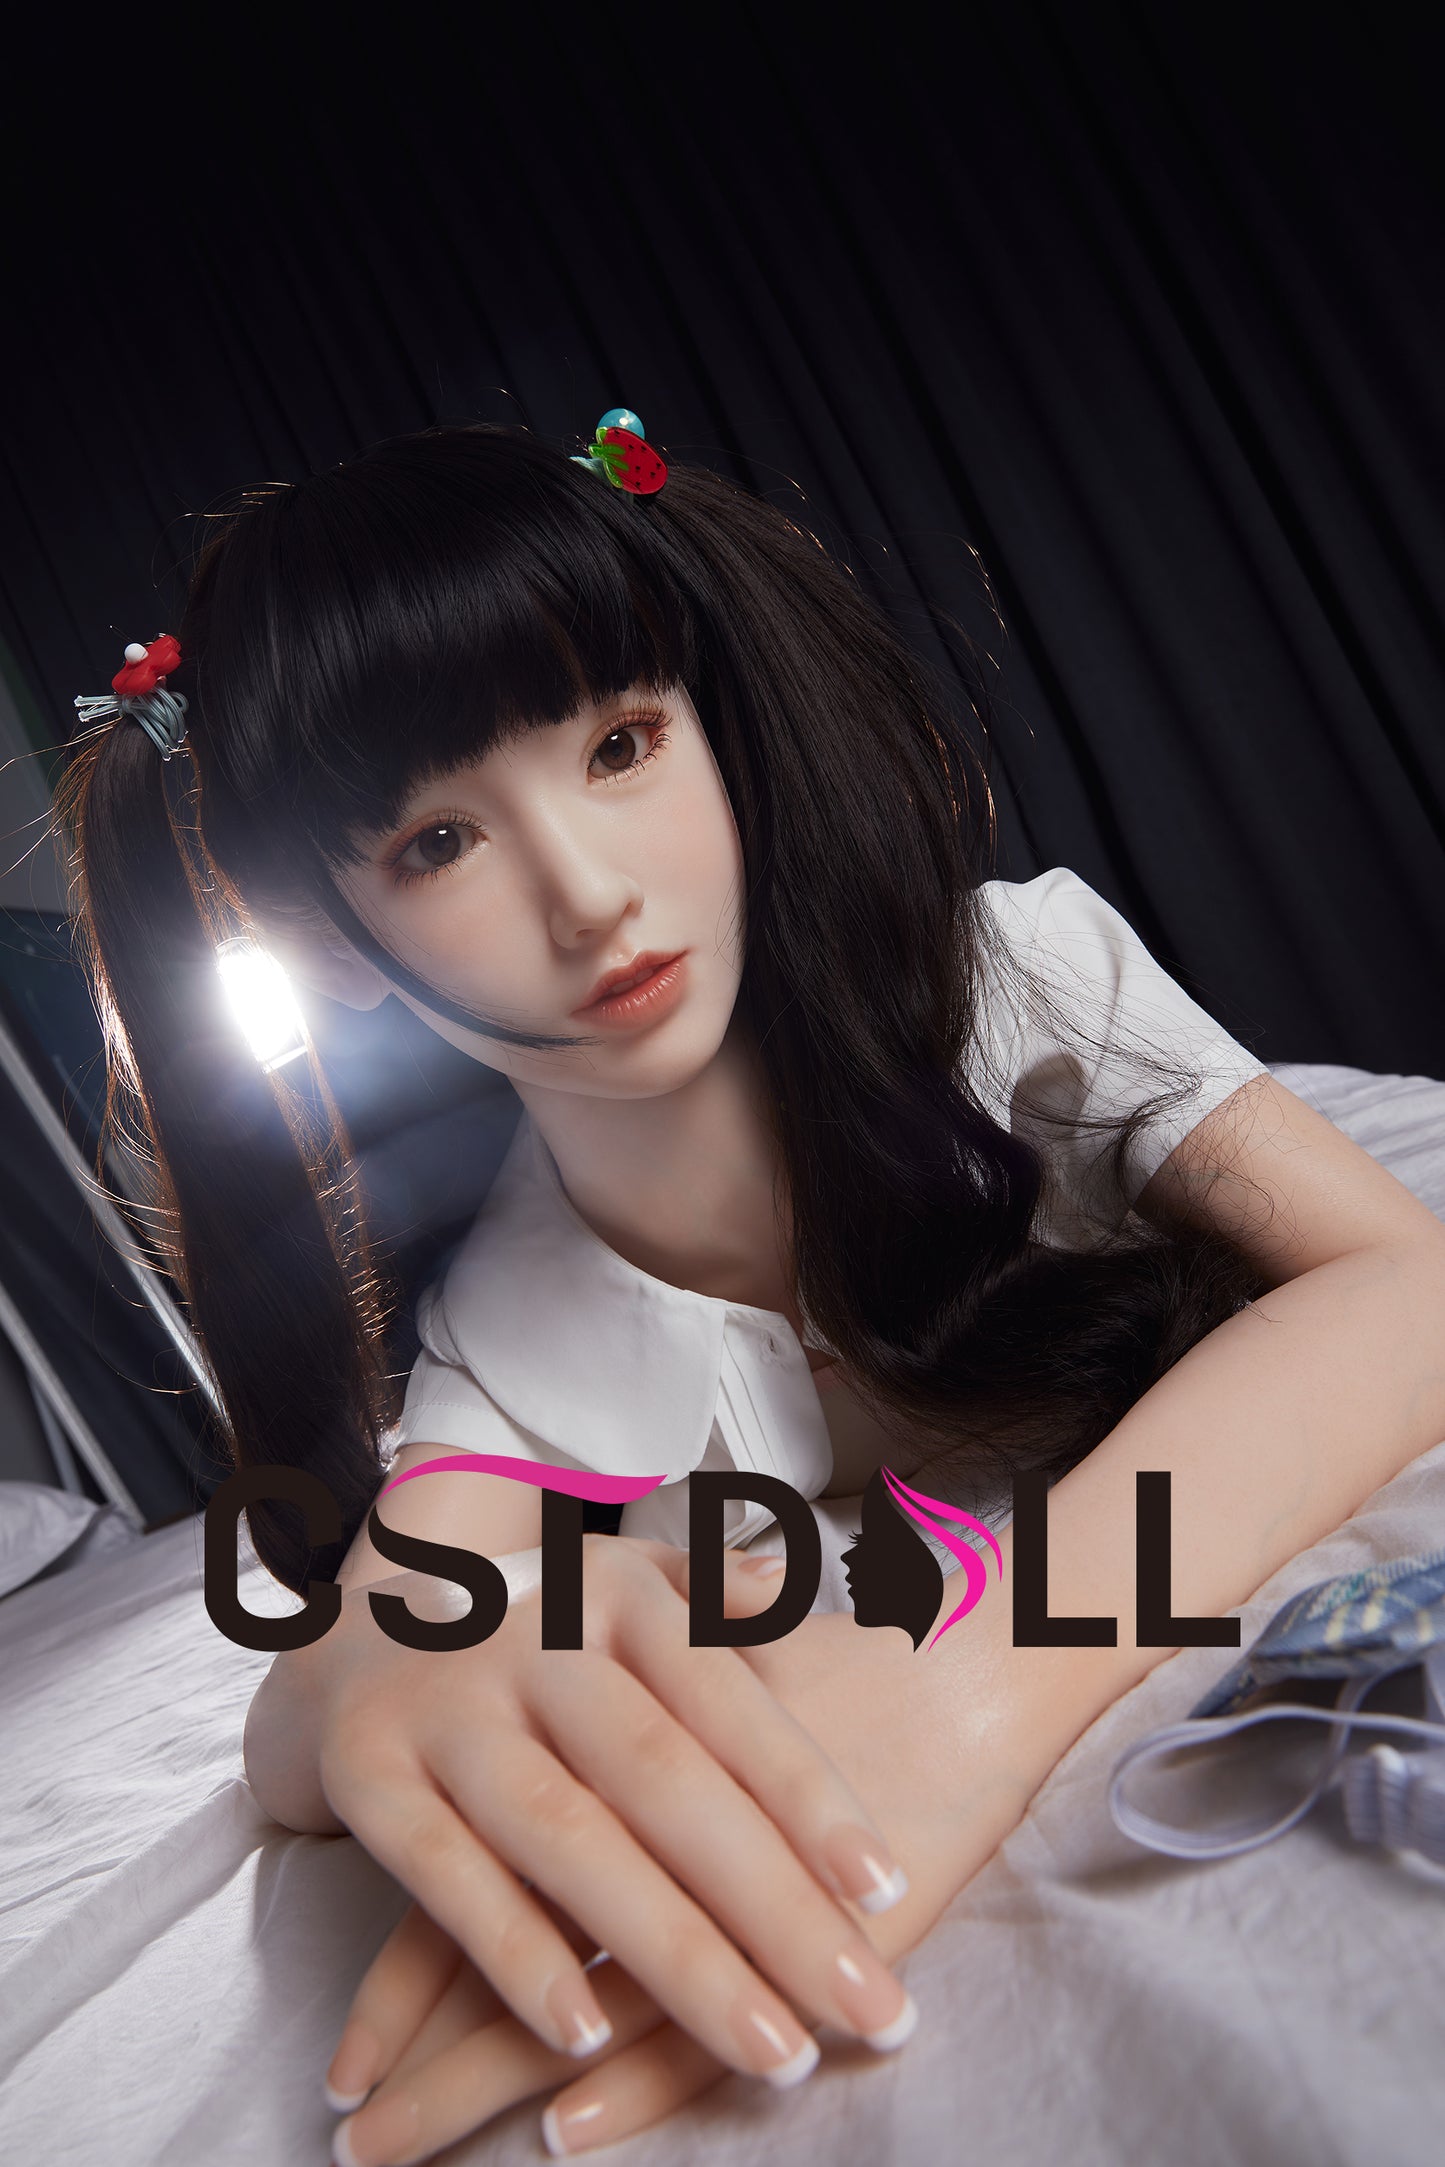 CST CICI-145cm-Bcup silicone doll